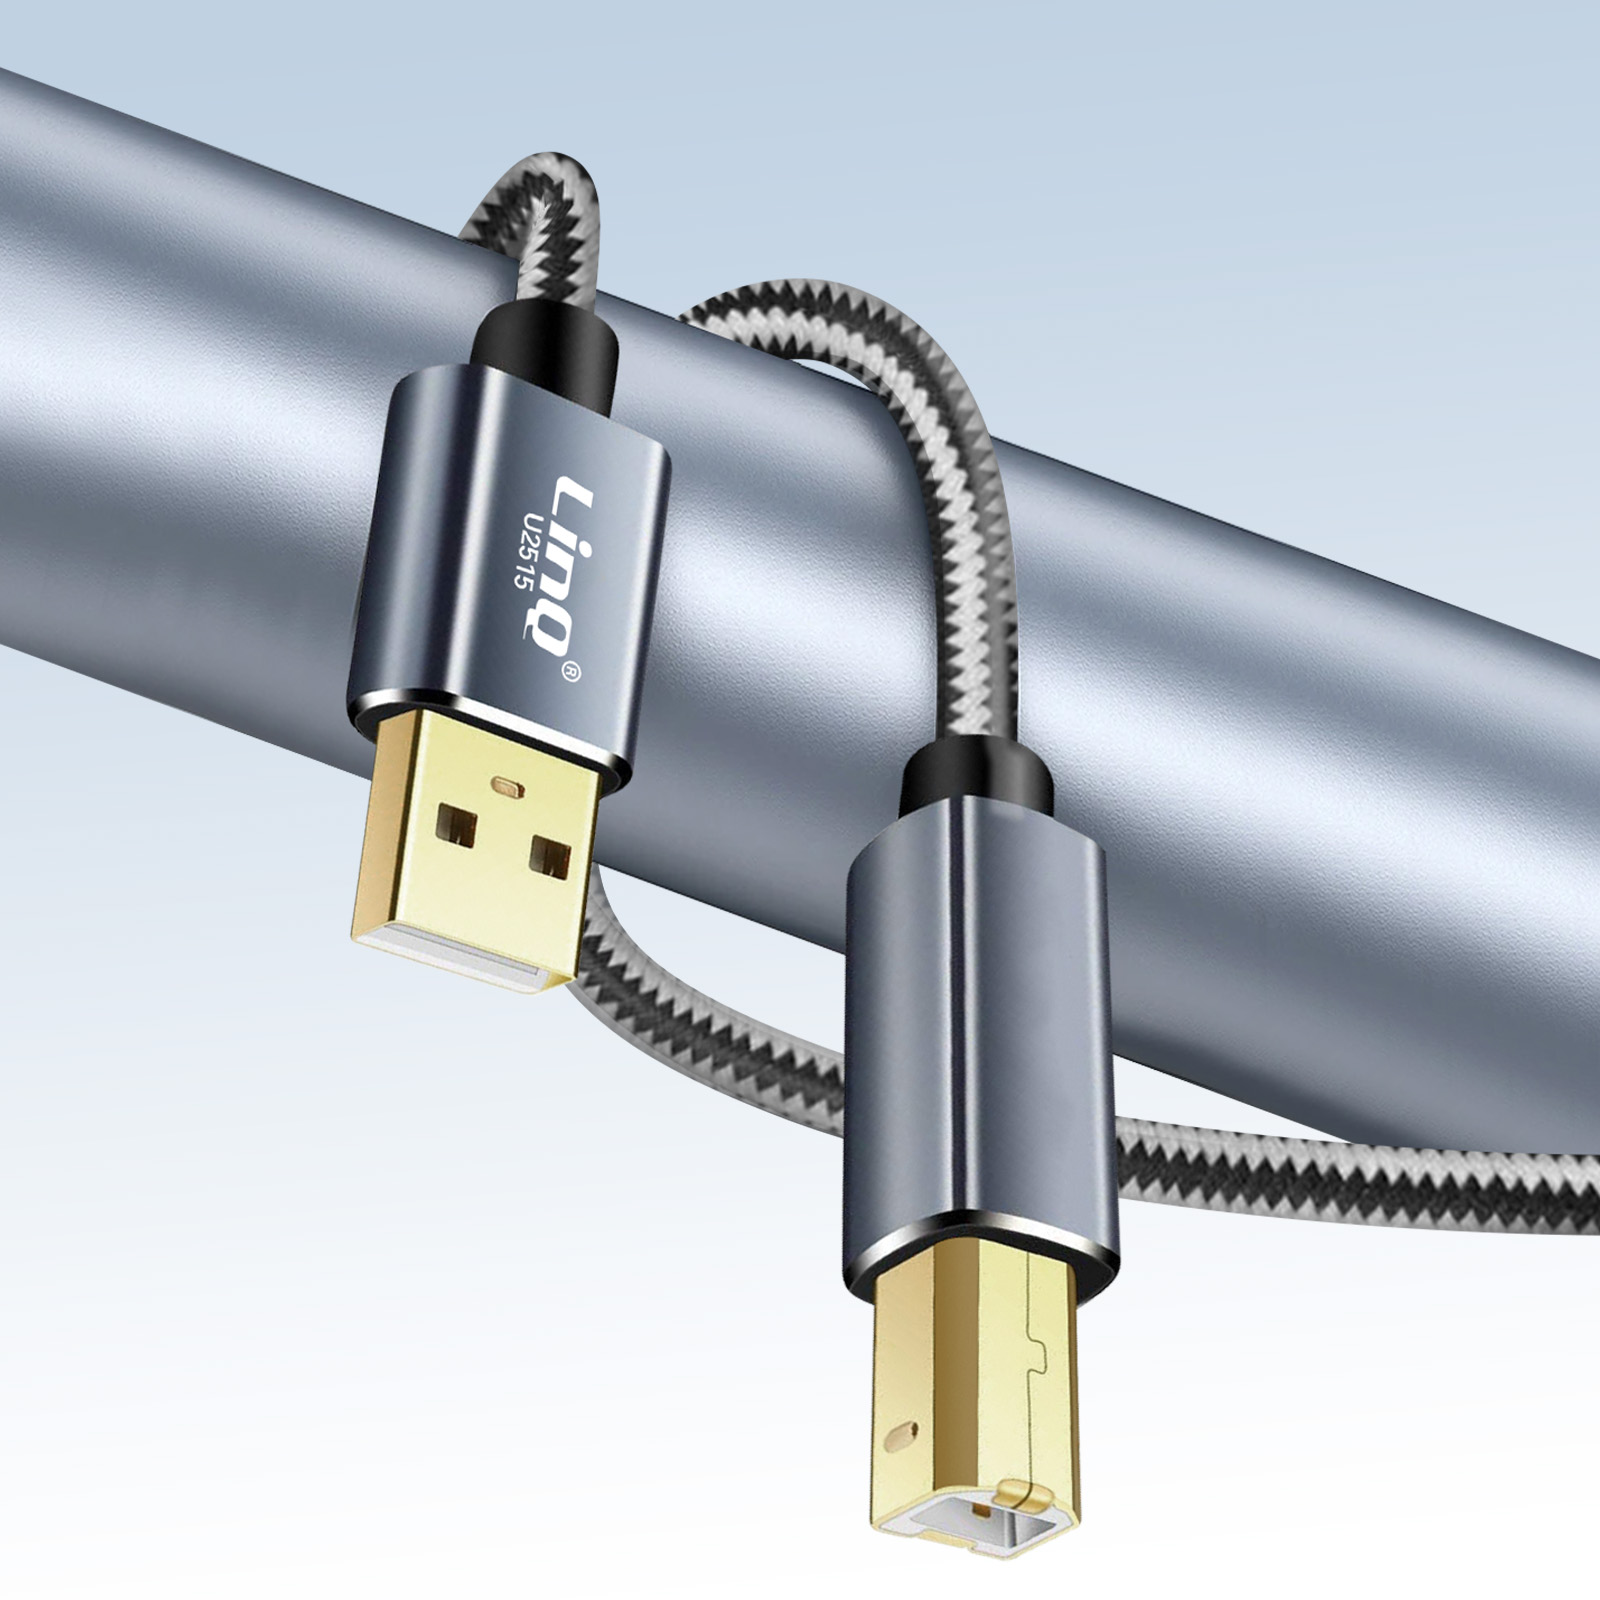 LINQ B, m USB Druckerkabel Druckerkabel, Nylon 1.5m 1,5